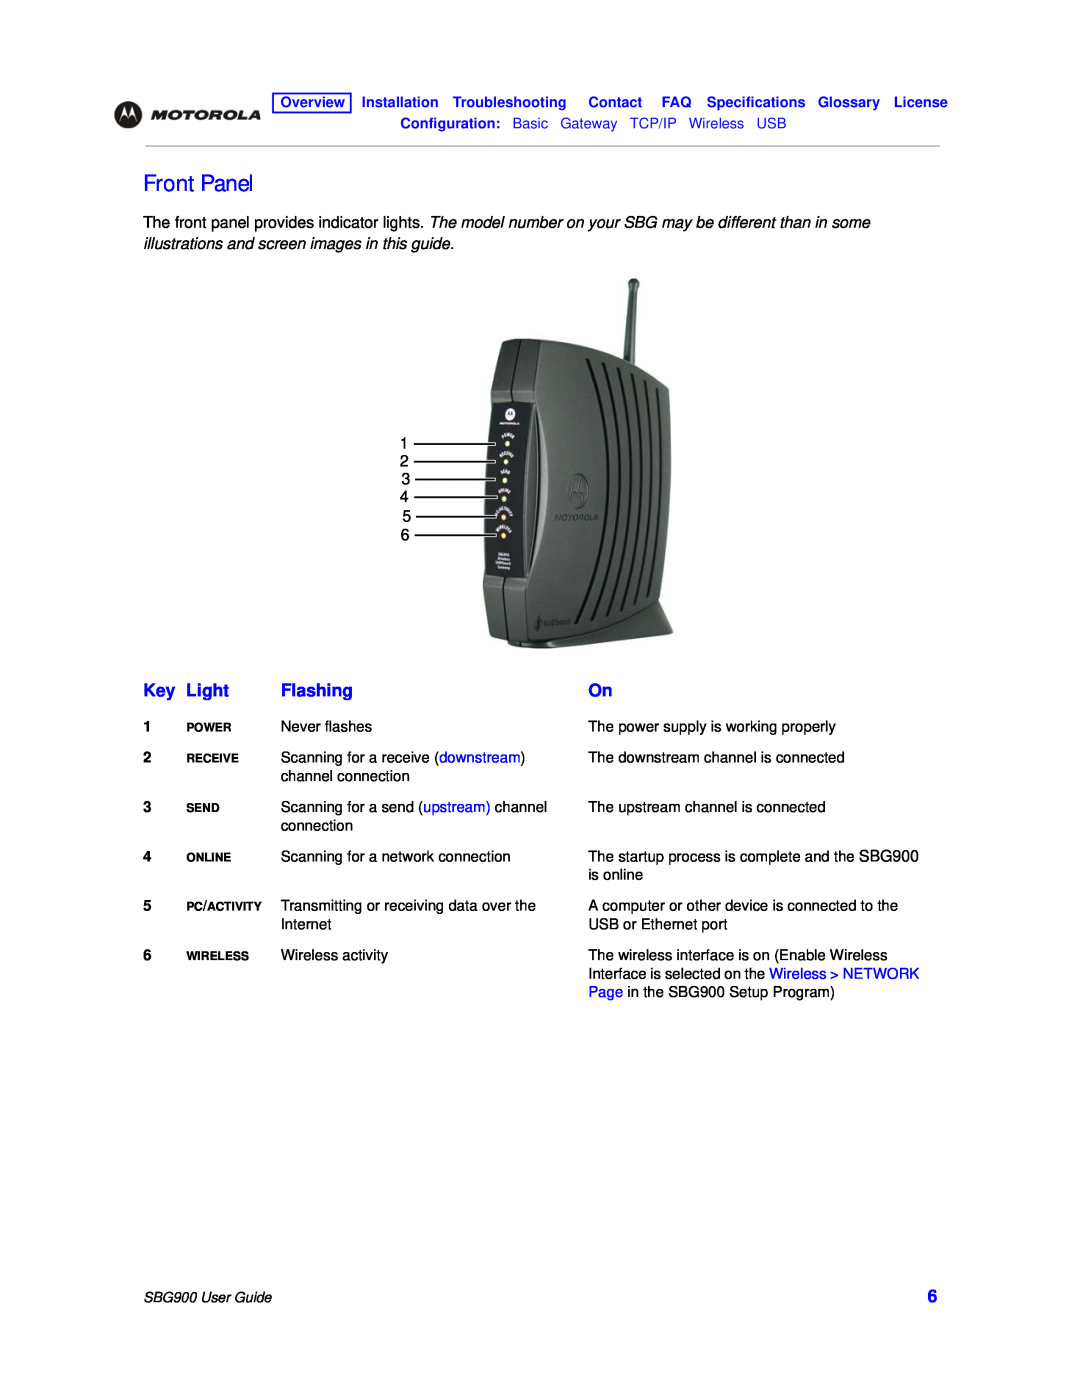 Motorola manual Front Panel, Light, Flashing, Configuration Basic Gateway TCP/IP Wireless USB, SBG900 User Guide 